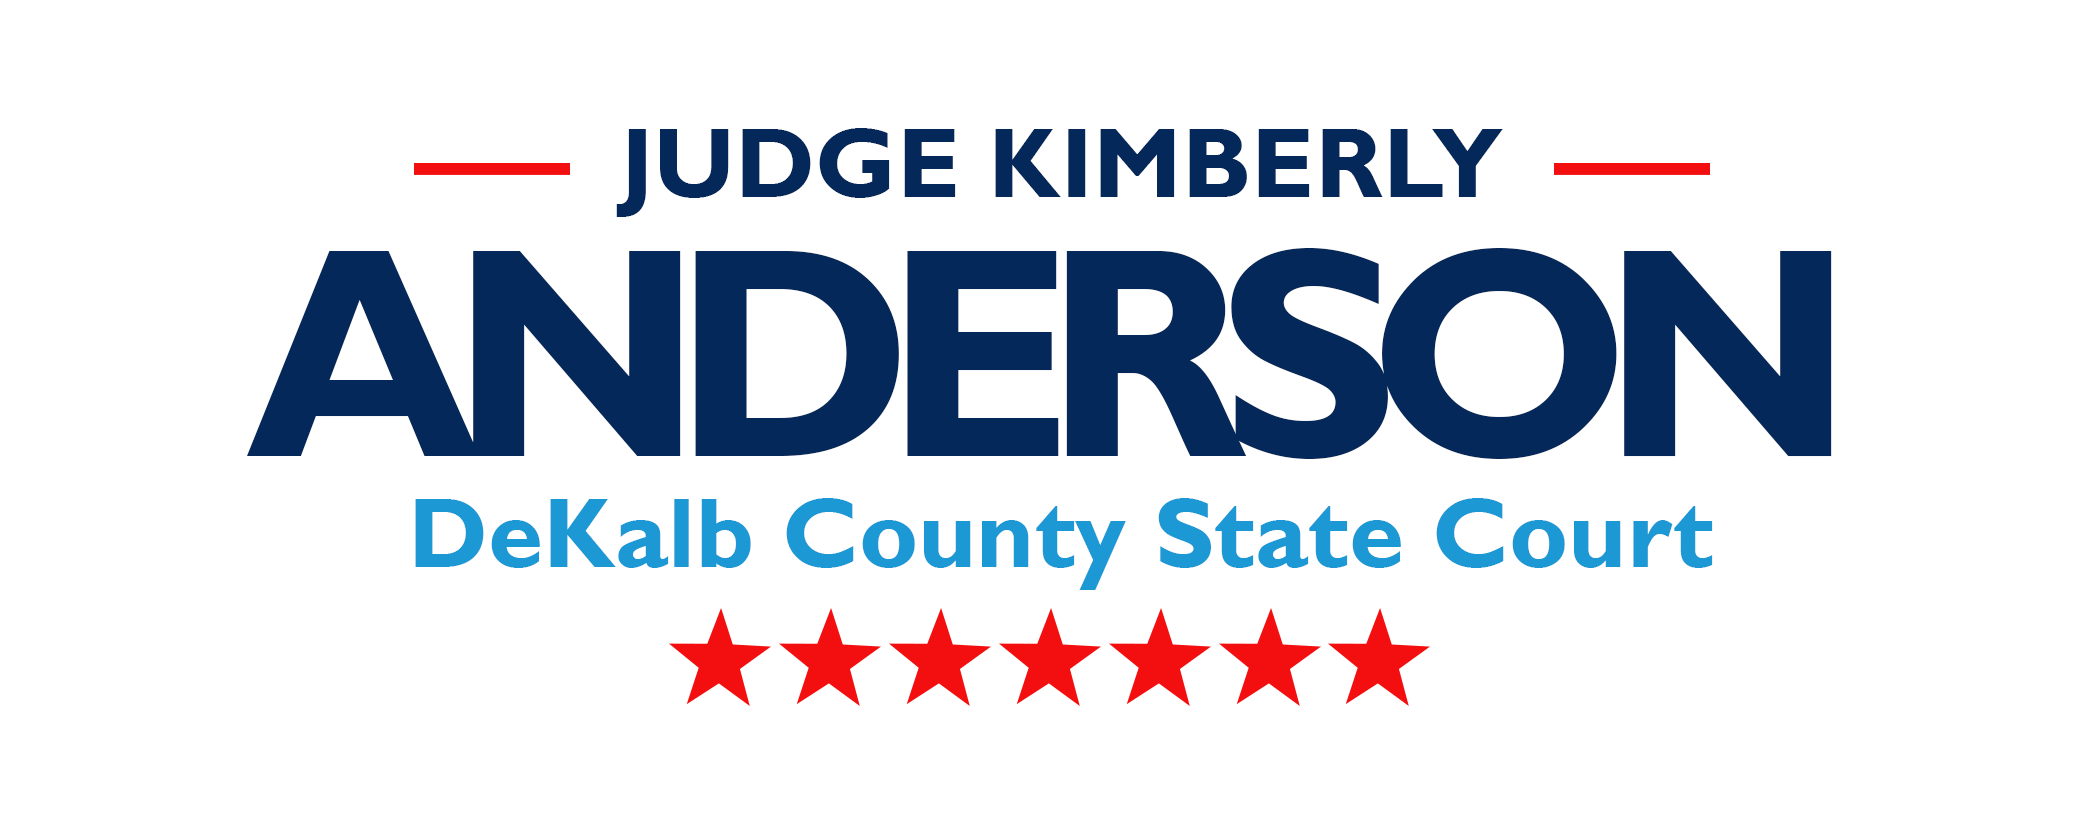 Judge Kimberly Anderson